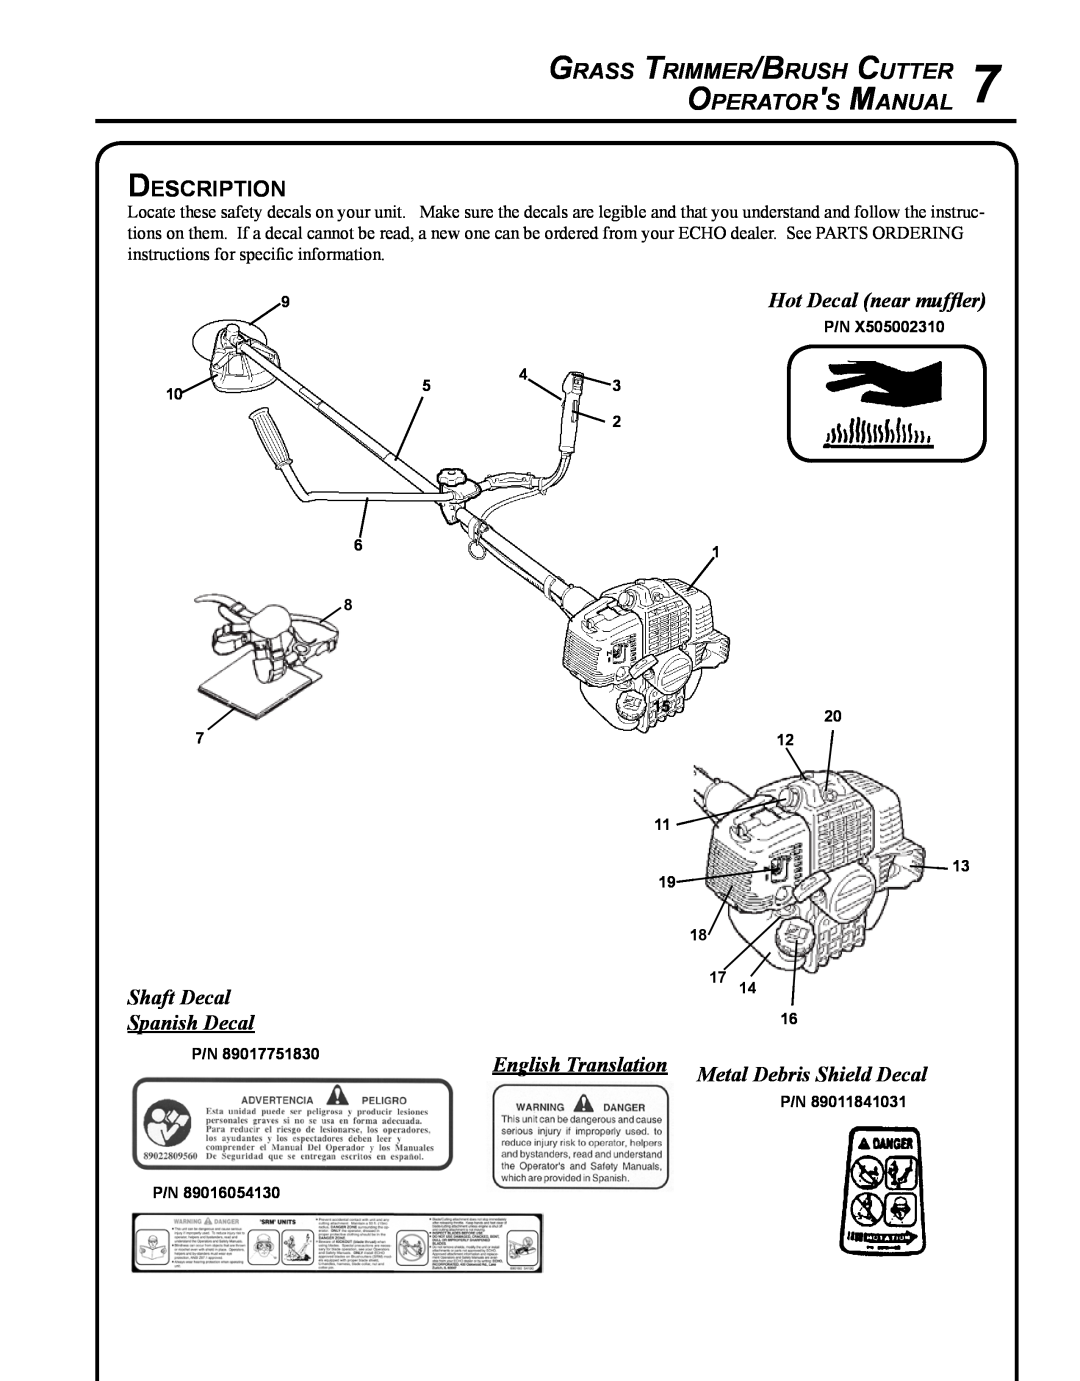 Echo SRM - 410U manual Description, Hot Decal near muffler, Shaft Decal, Spanish Decal, English Translation 